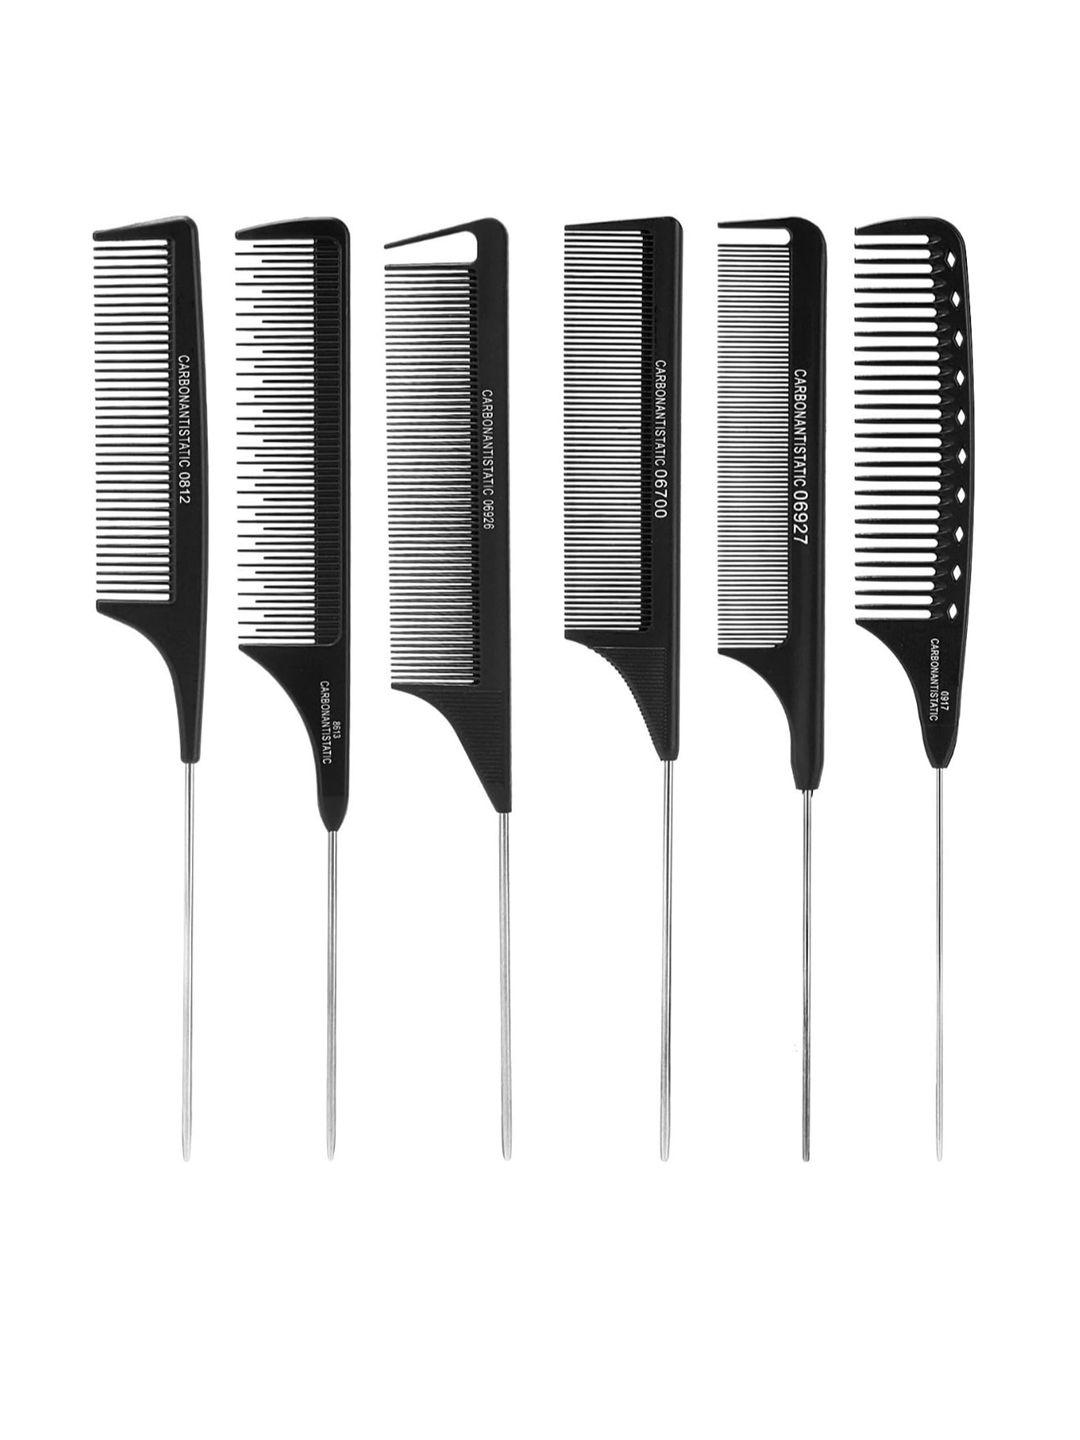 feelhigh-set-of-6-carbon-fiber-&-stainless-steel-hair-combs---black